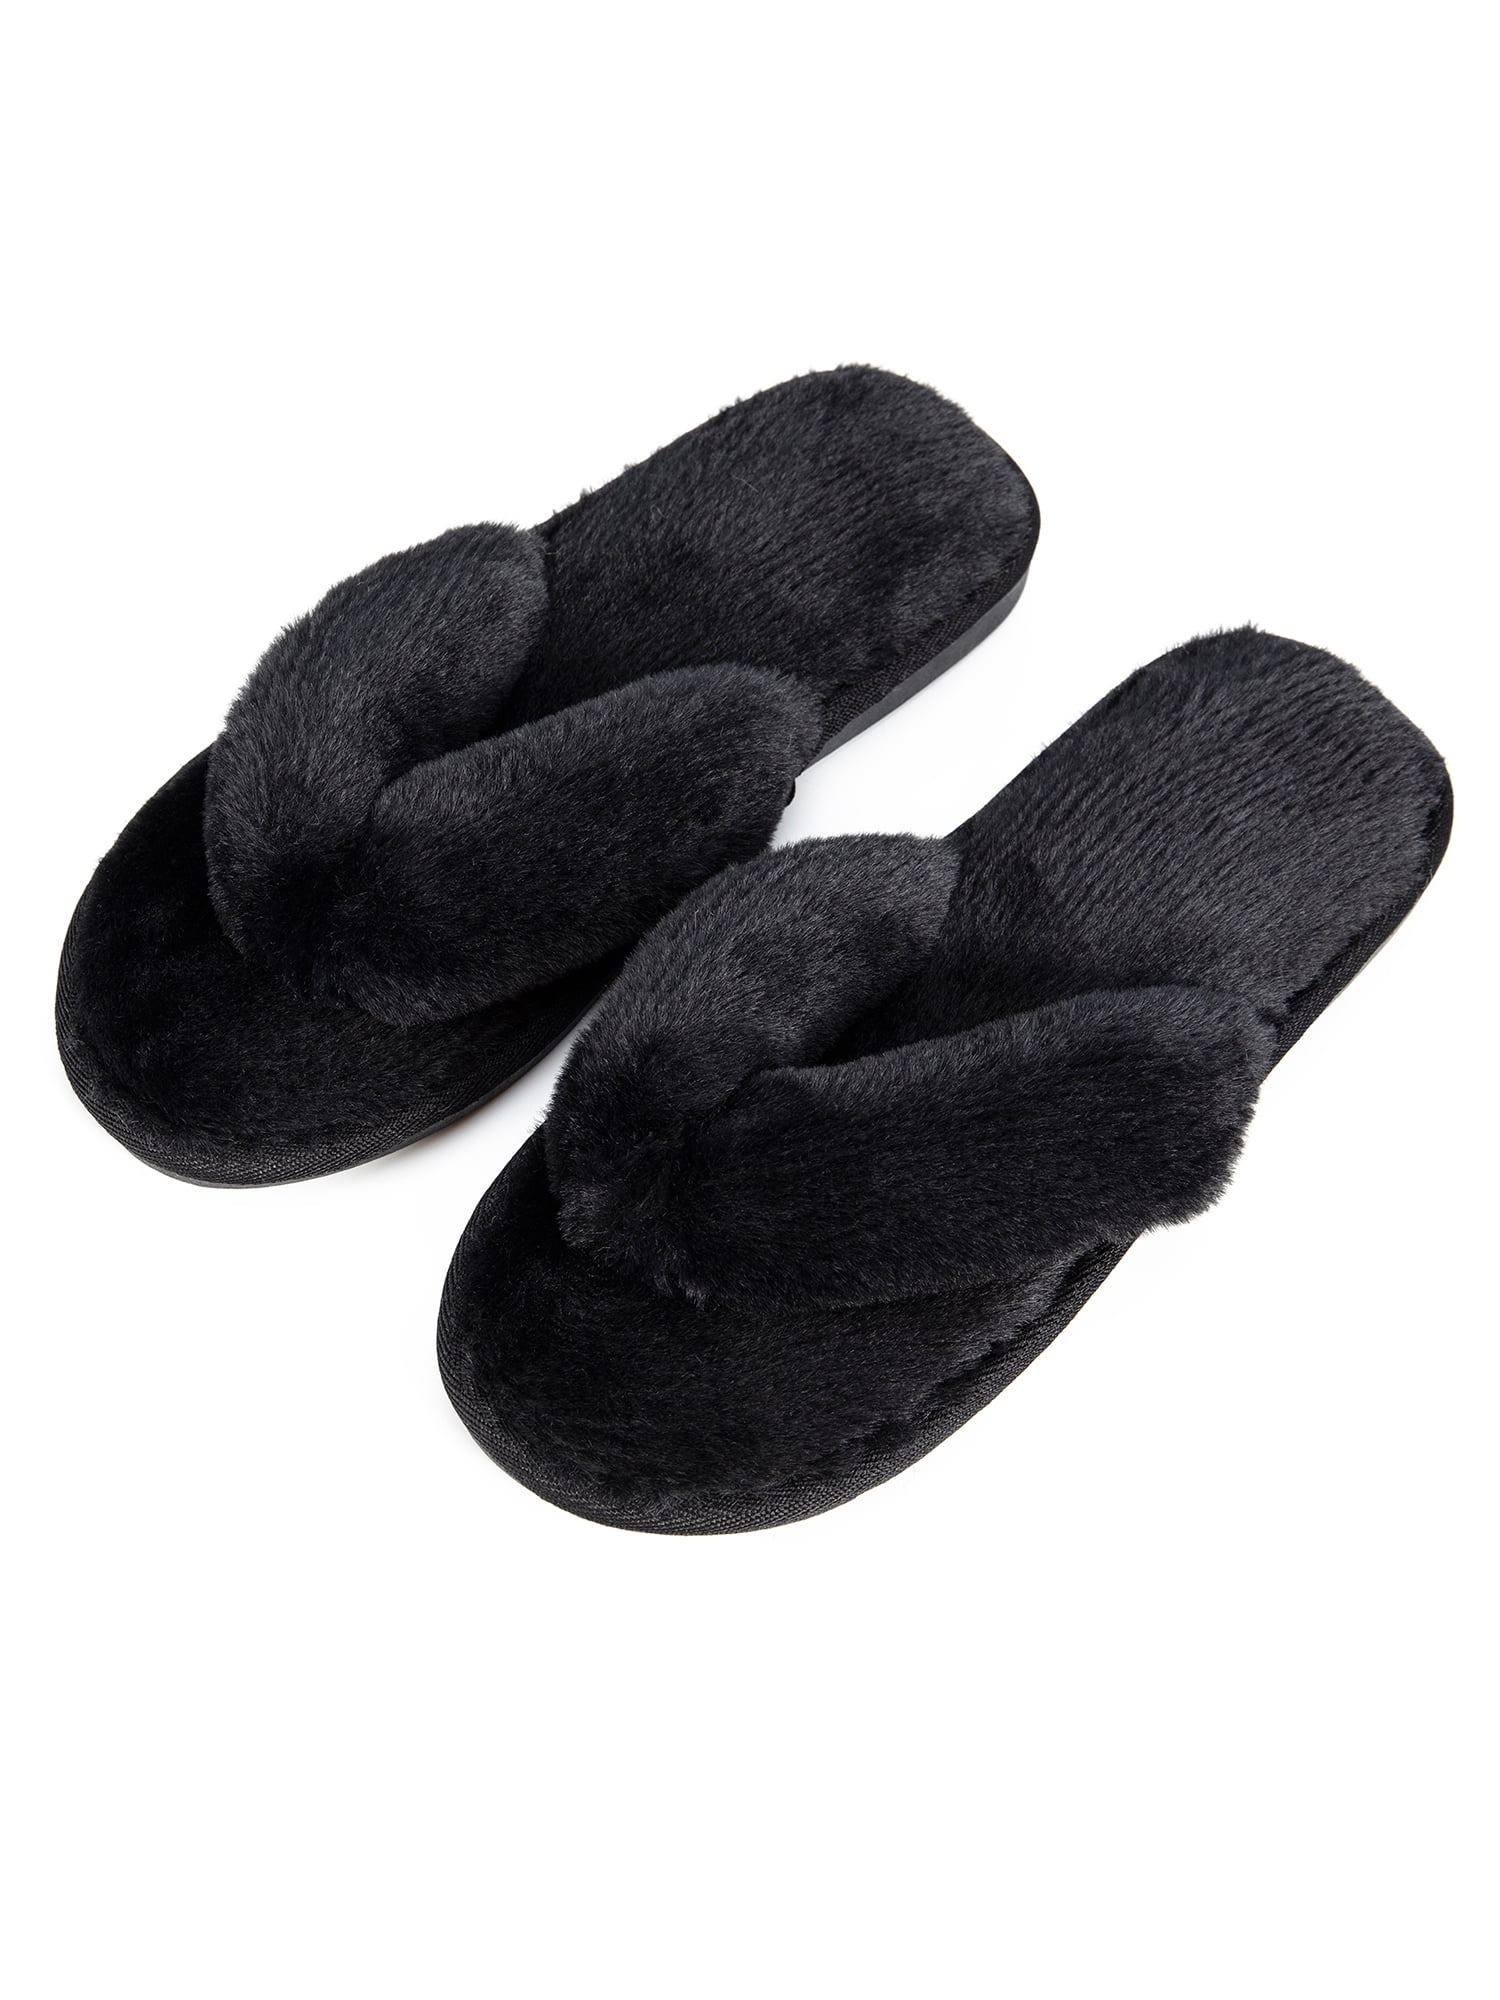 Women Plush Splash Spa Thong Flip flop Flat Home Slippers Indoor Winter Shoes 